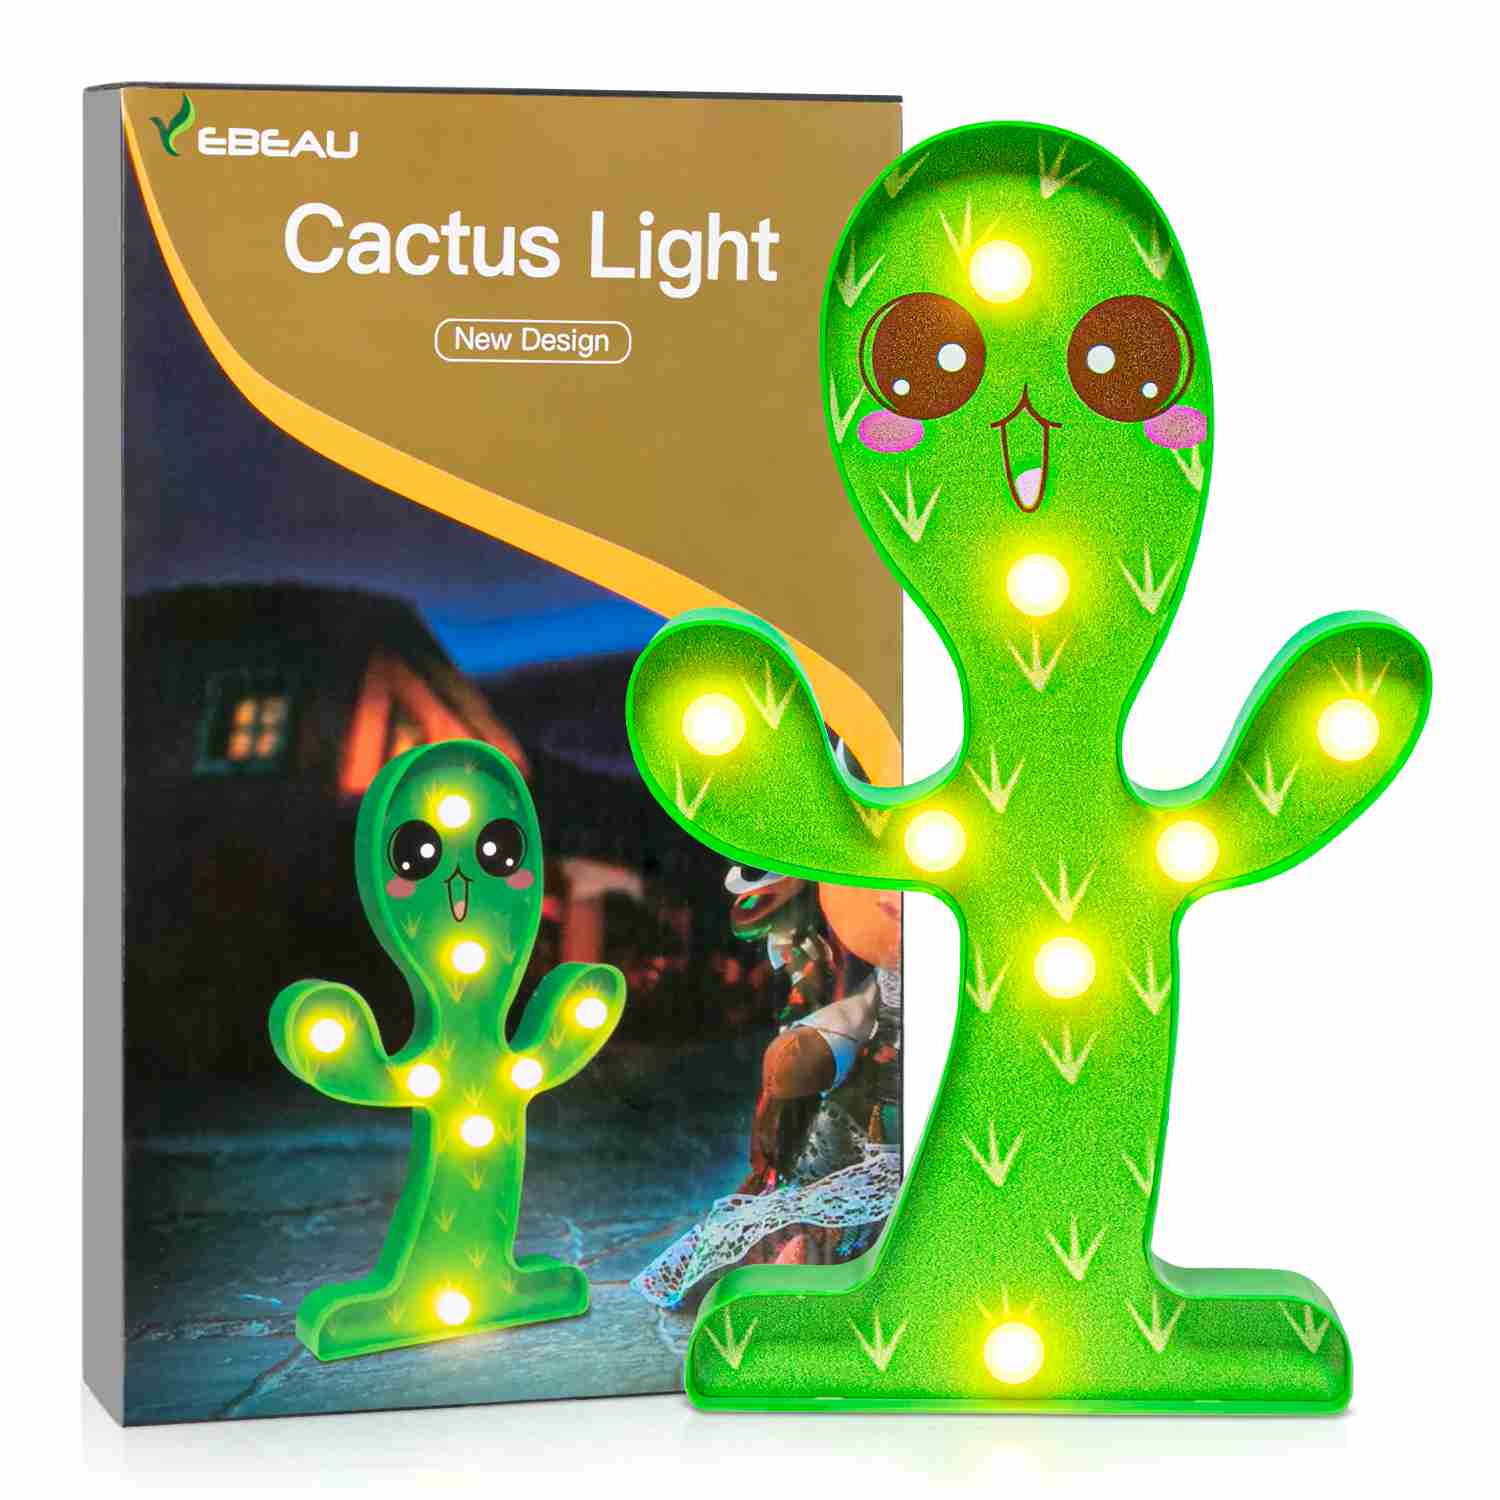 cactus-light-decor with cash back rebate